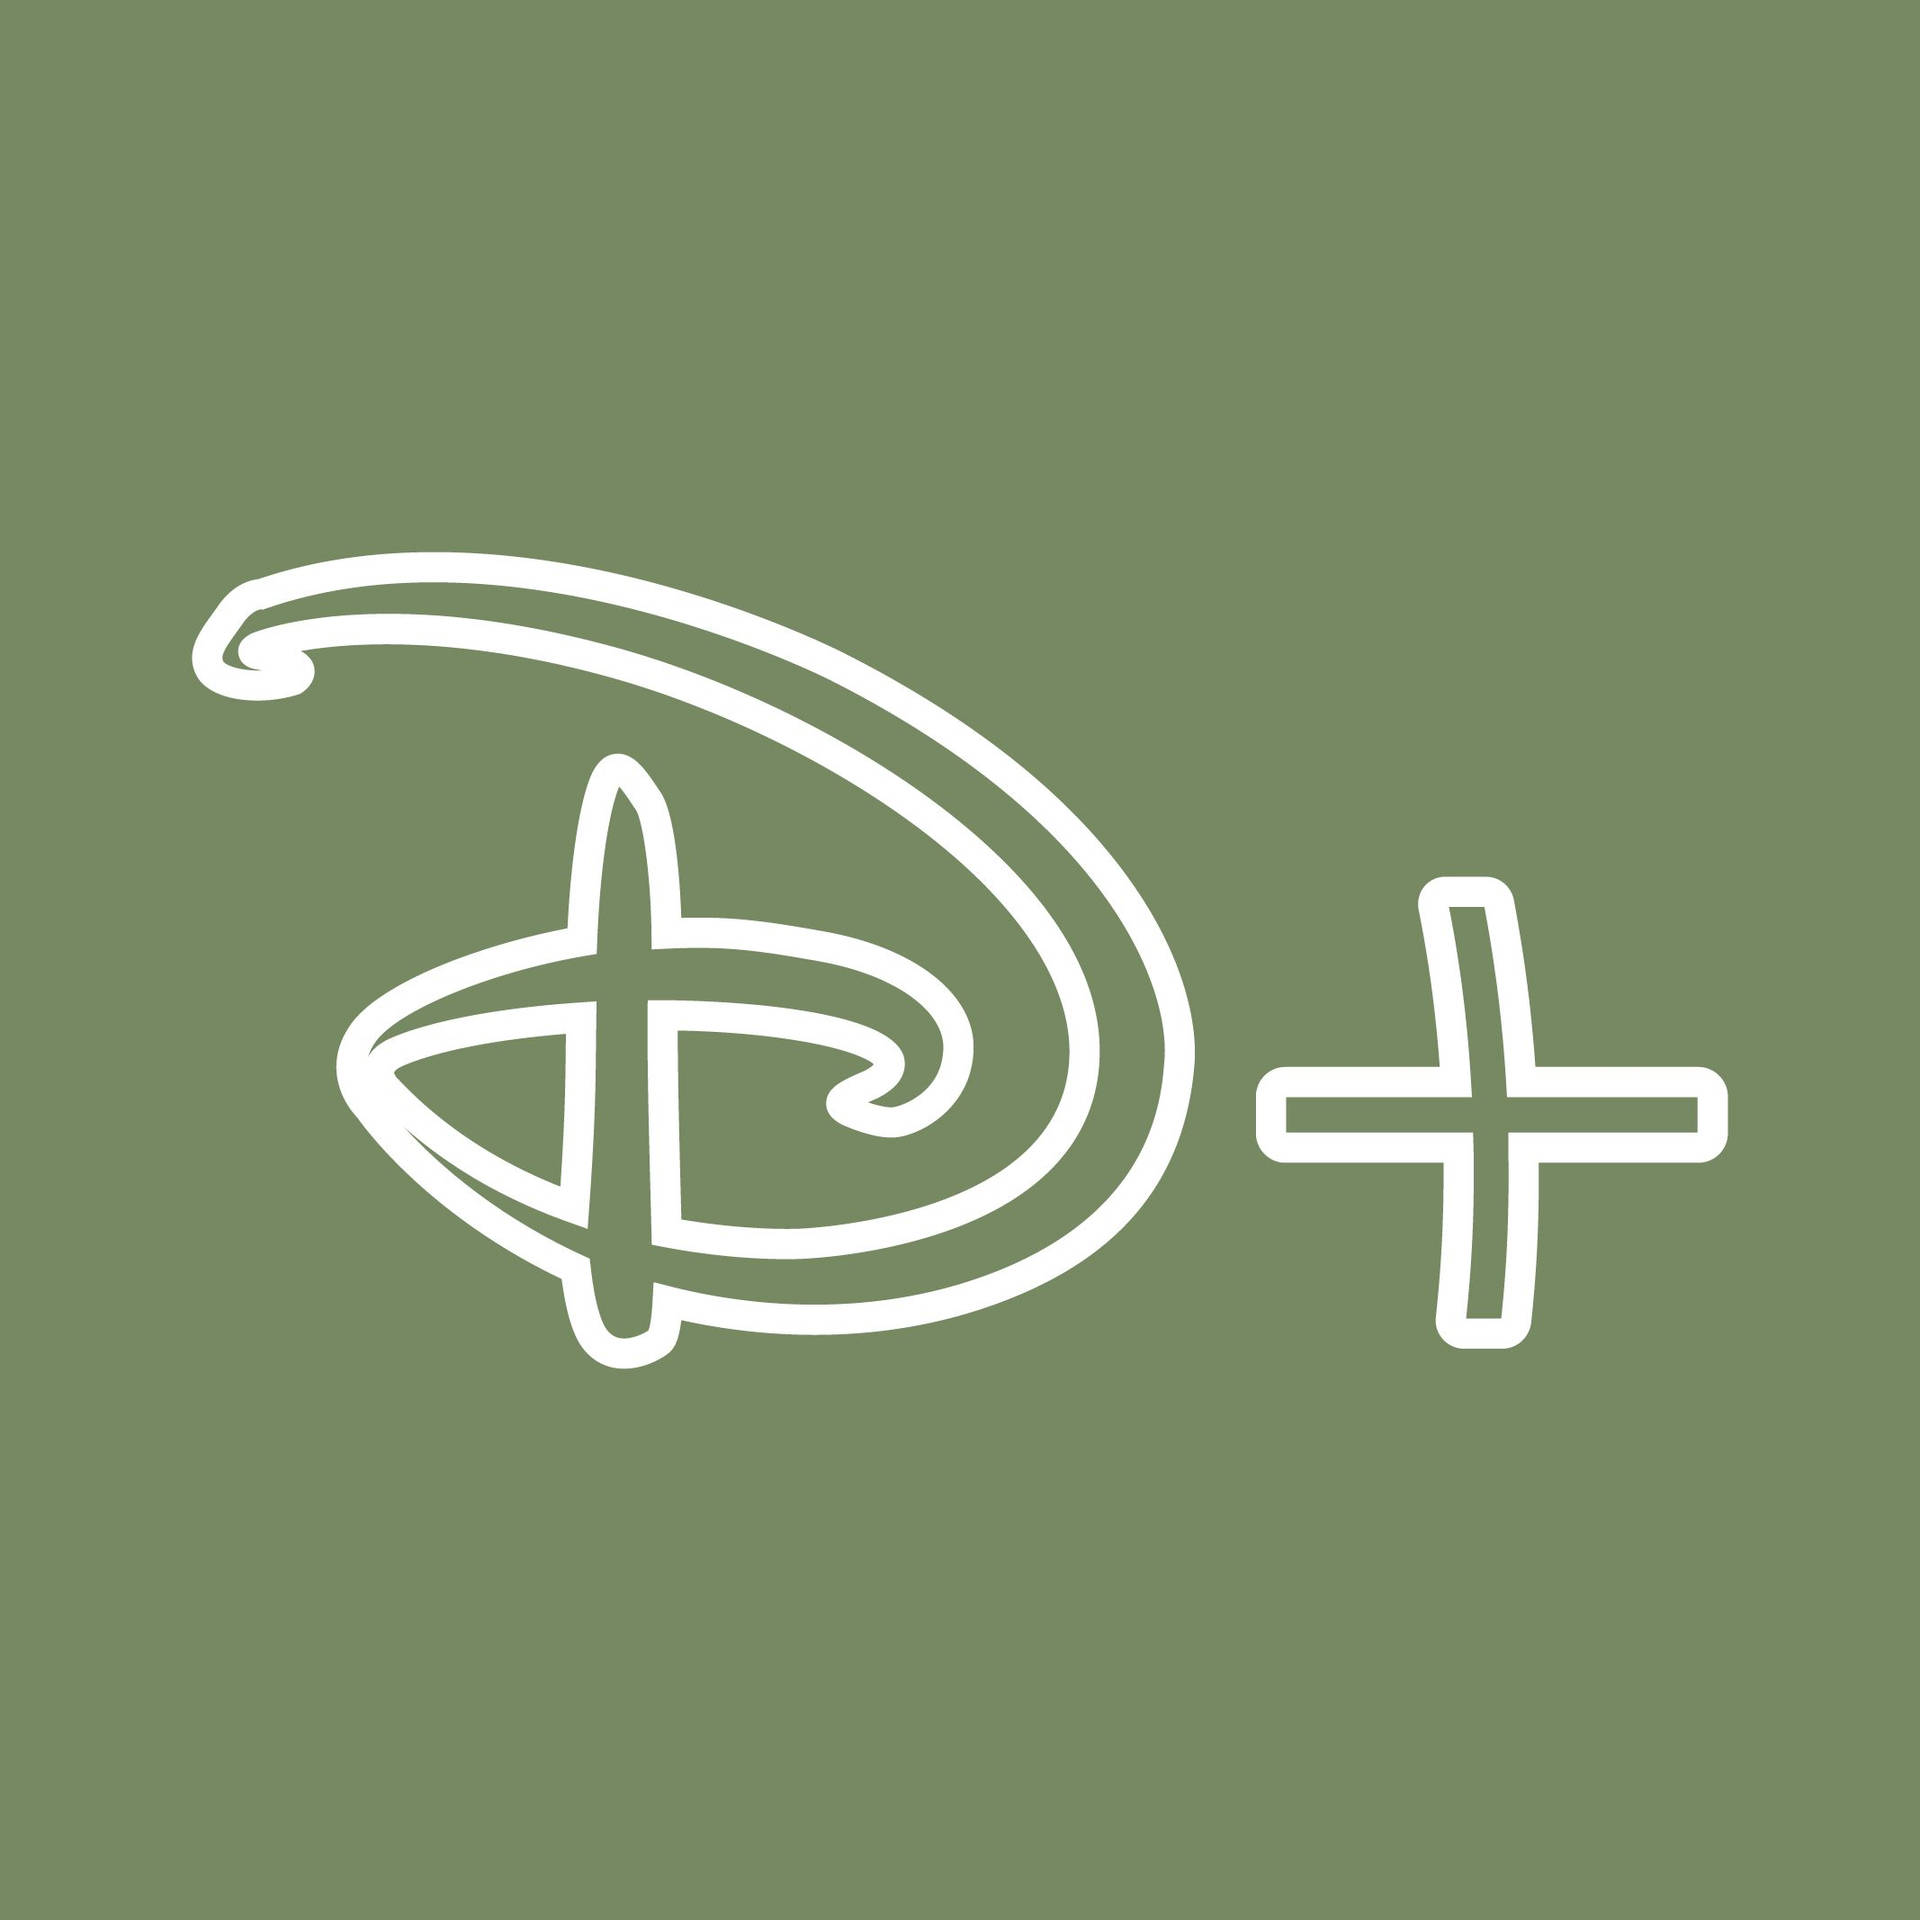 Disney Plus pastel green logo wallpaper 